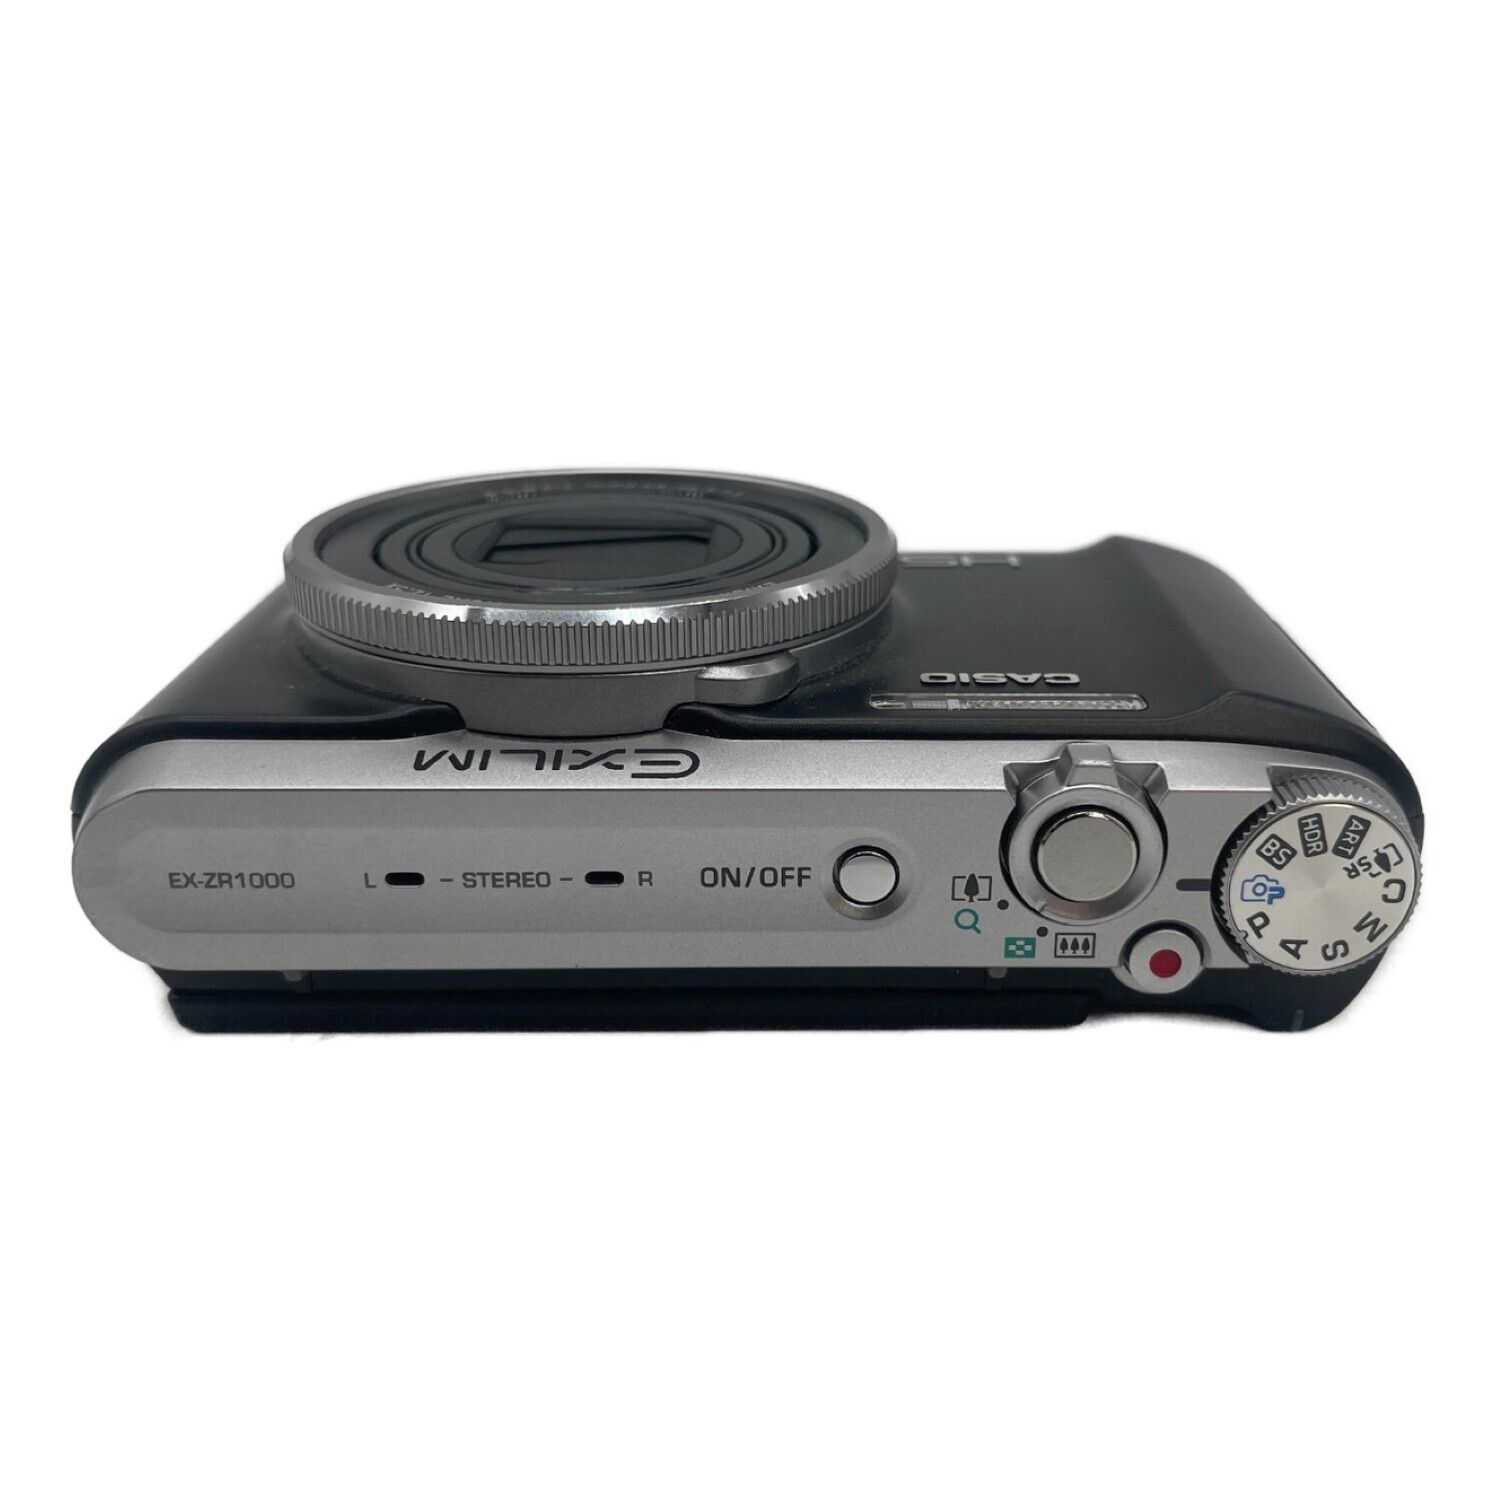 CASIO (カシオ) デジタルカメラ EXILiM EX-ZR1000 1610万画素(有効画素